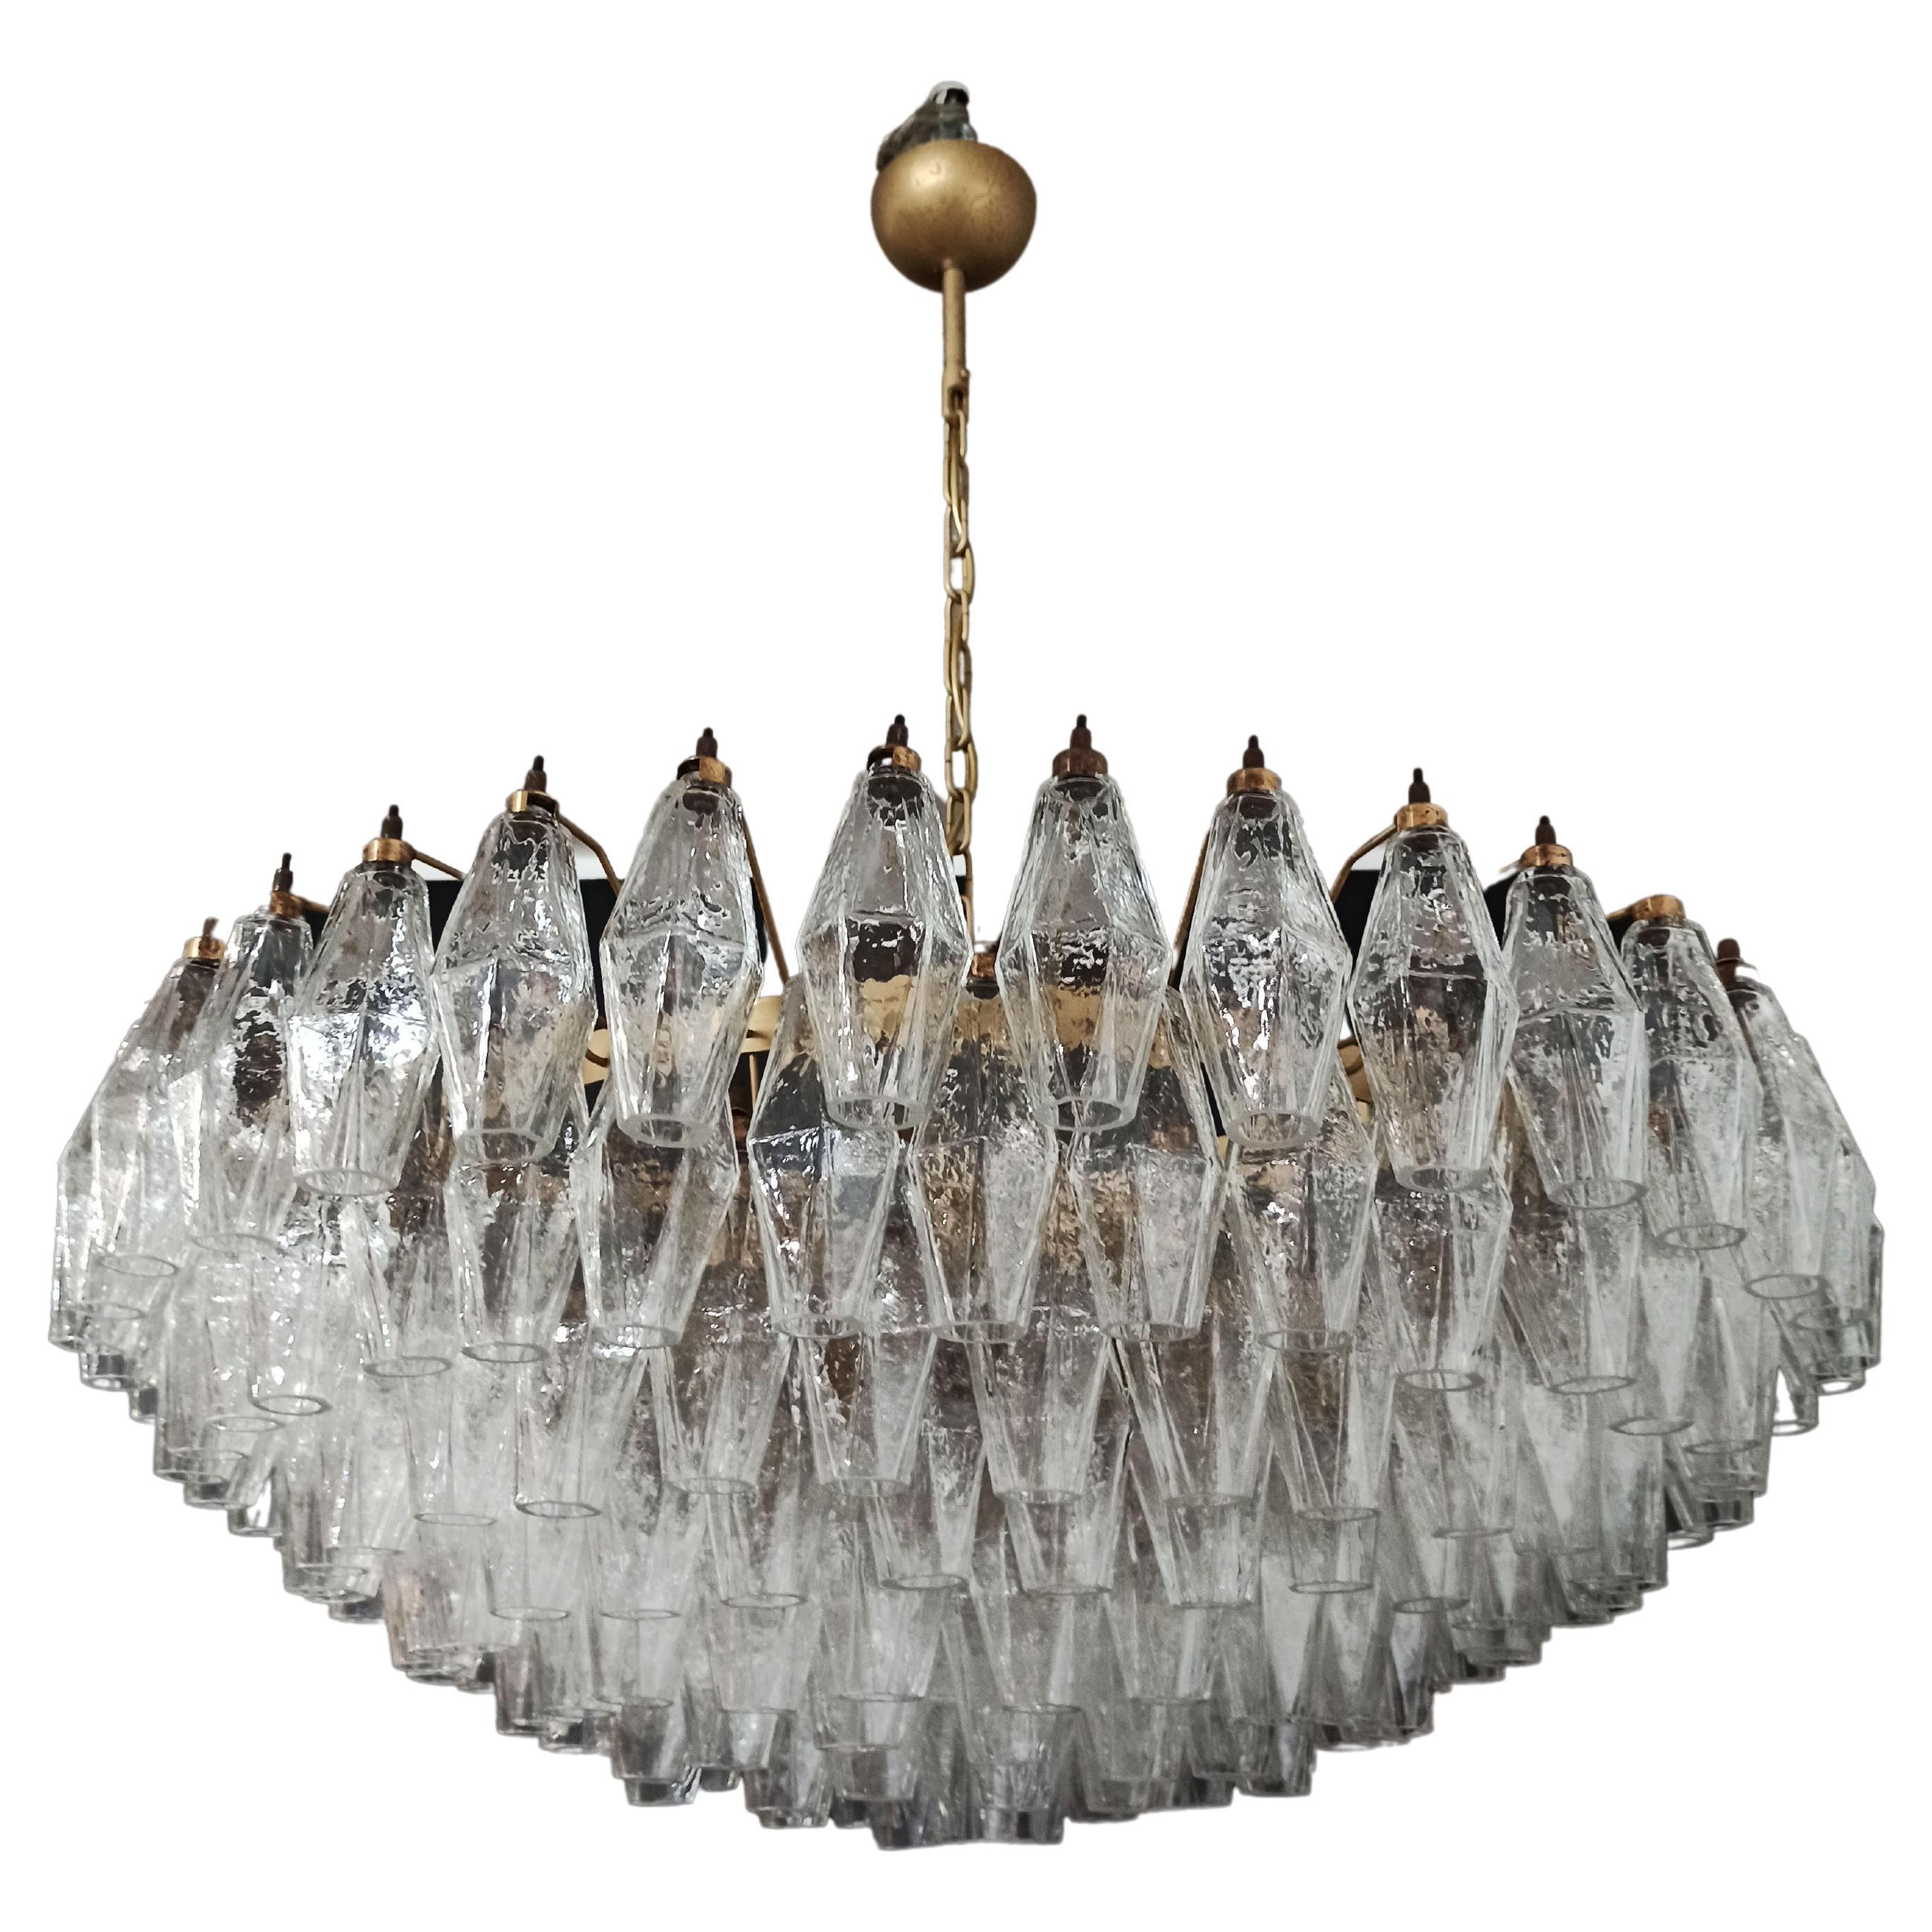 Amazing Murano glass Candelier - 185 poliedri For Sale